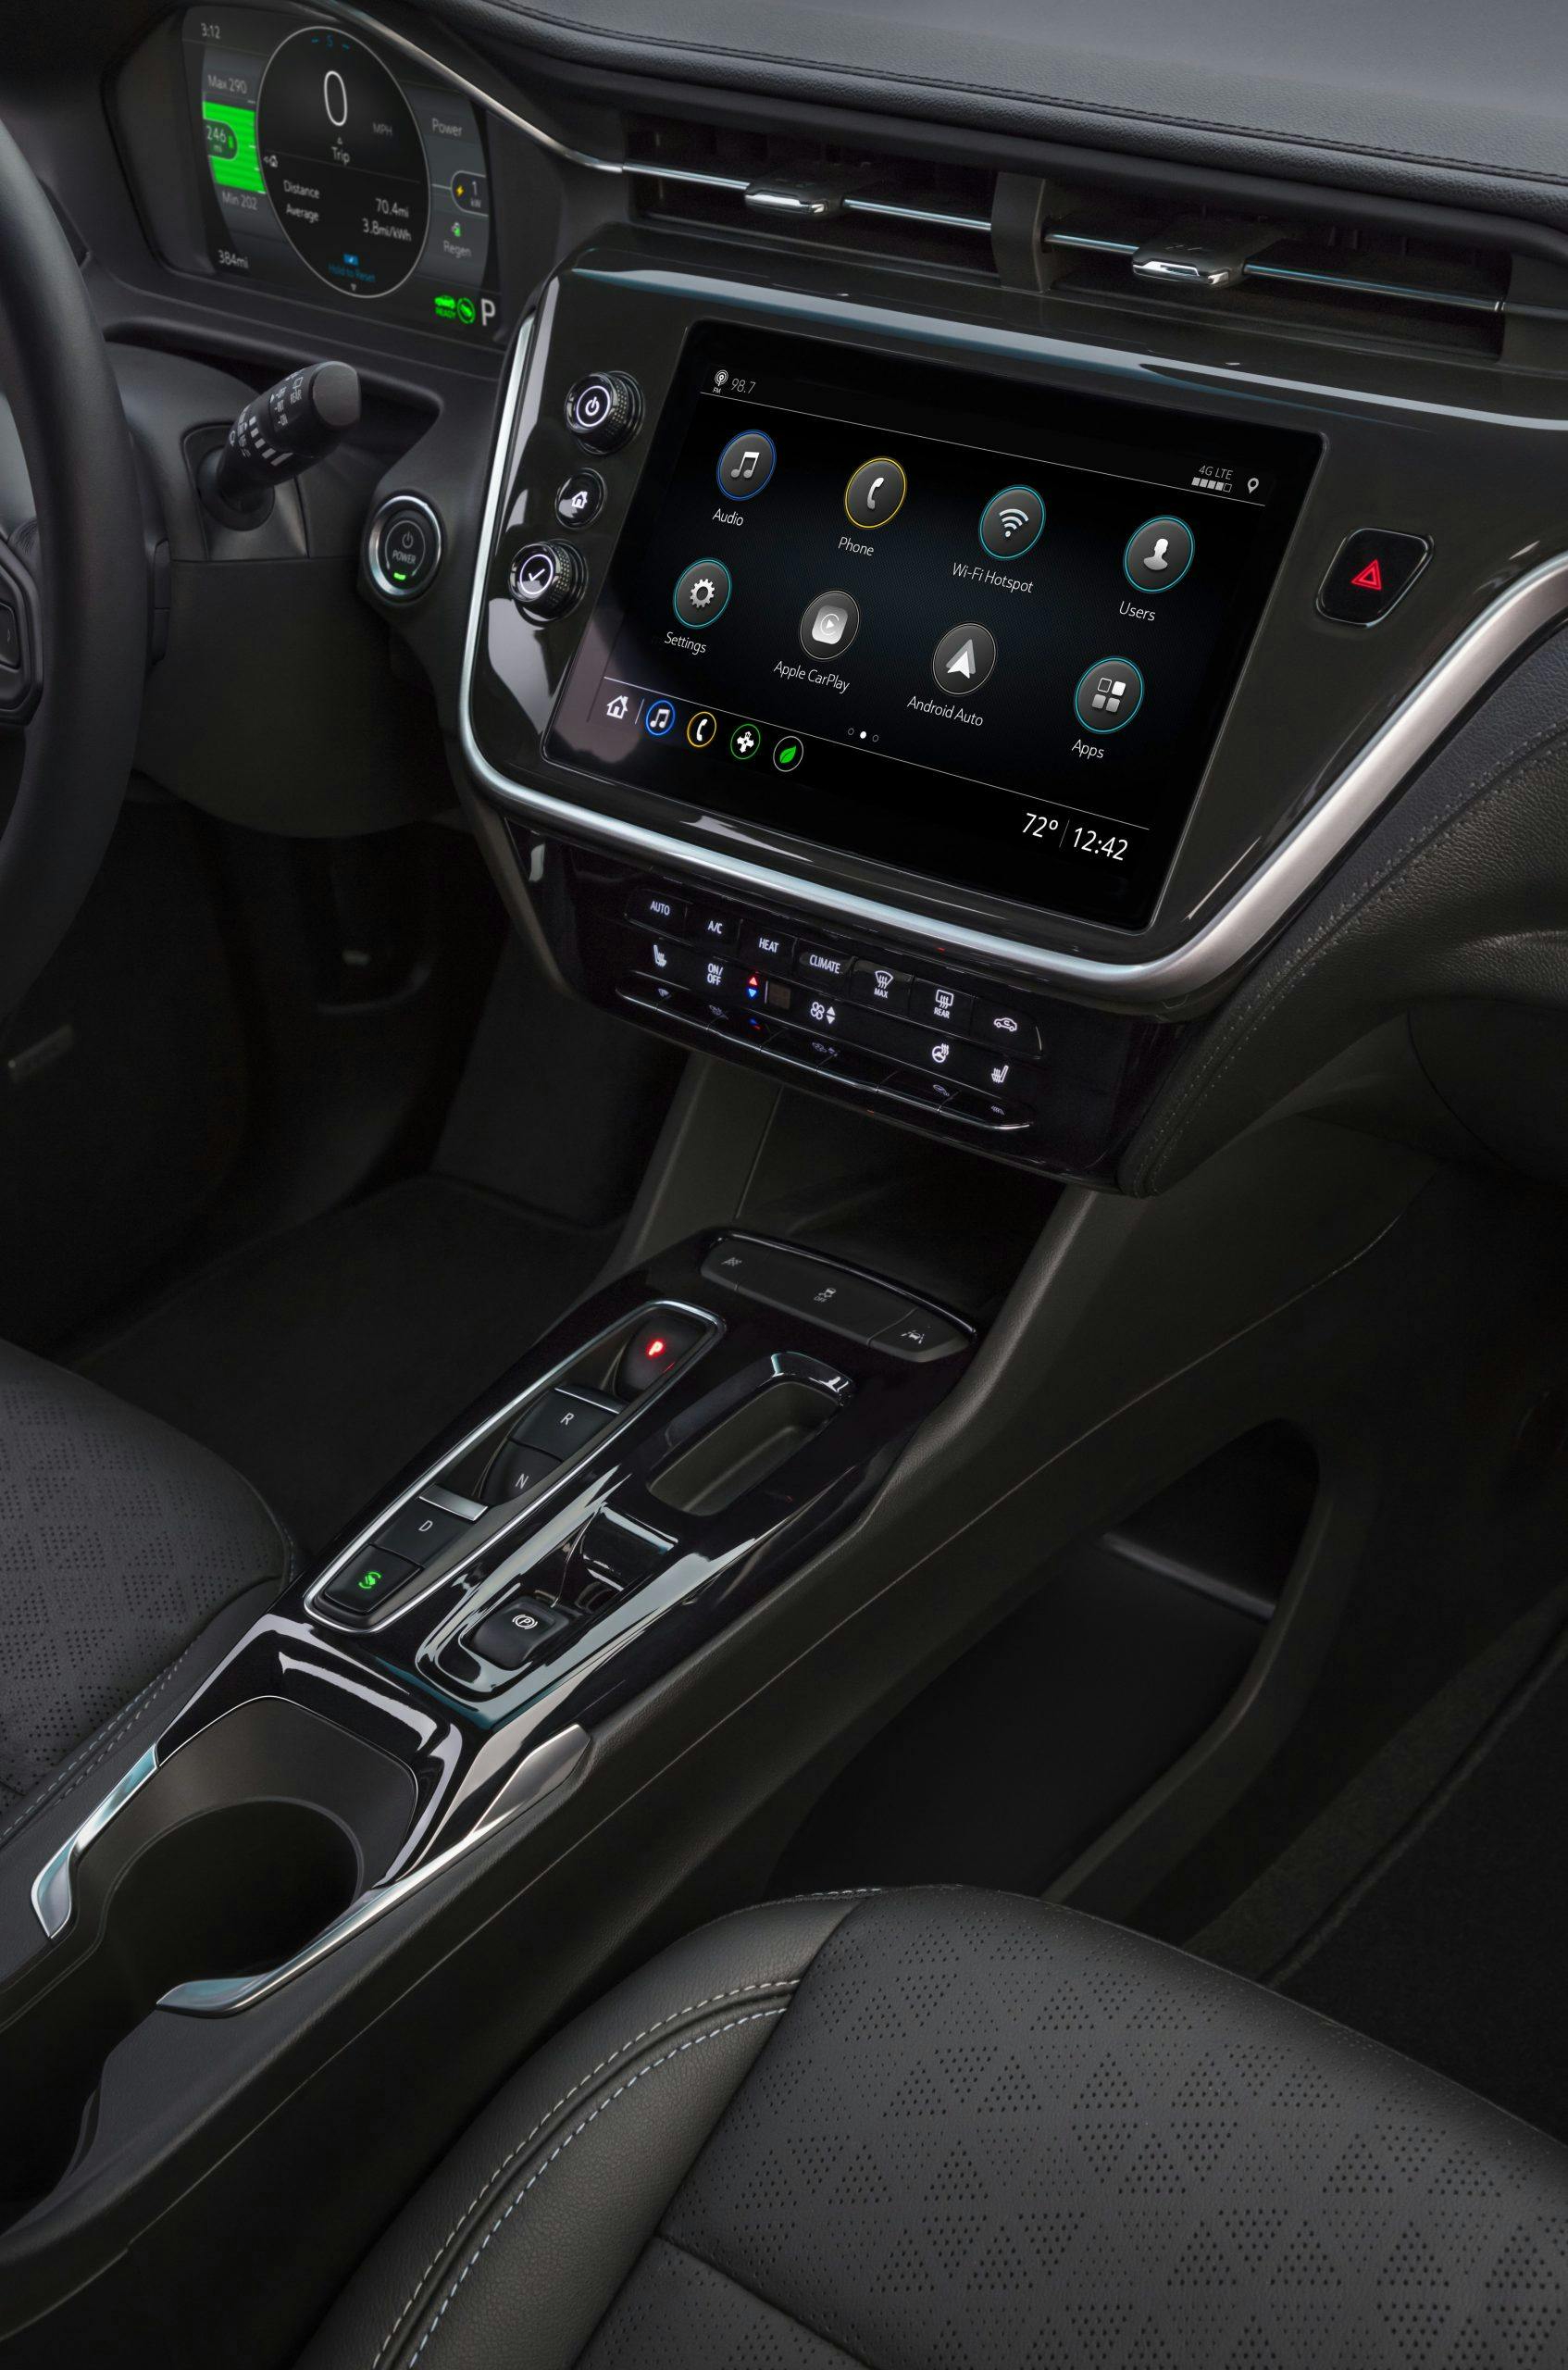 2022 Chevrolet Bolt EV center console interior screen